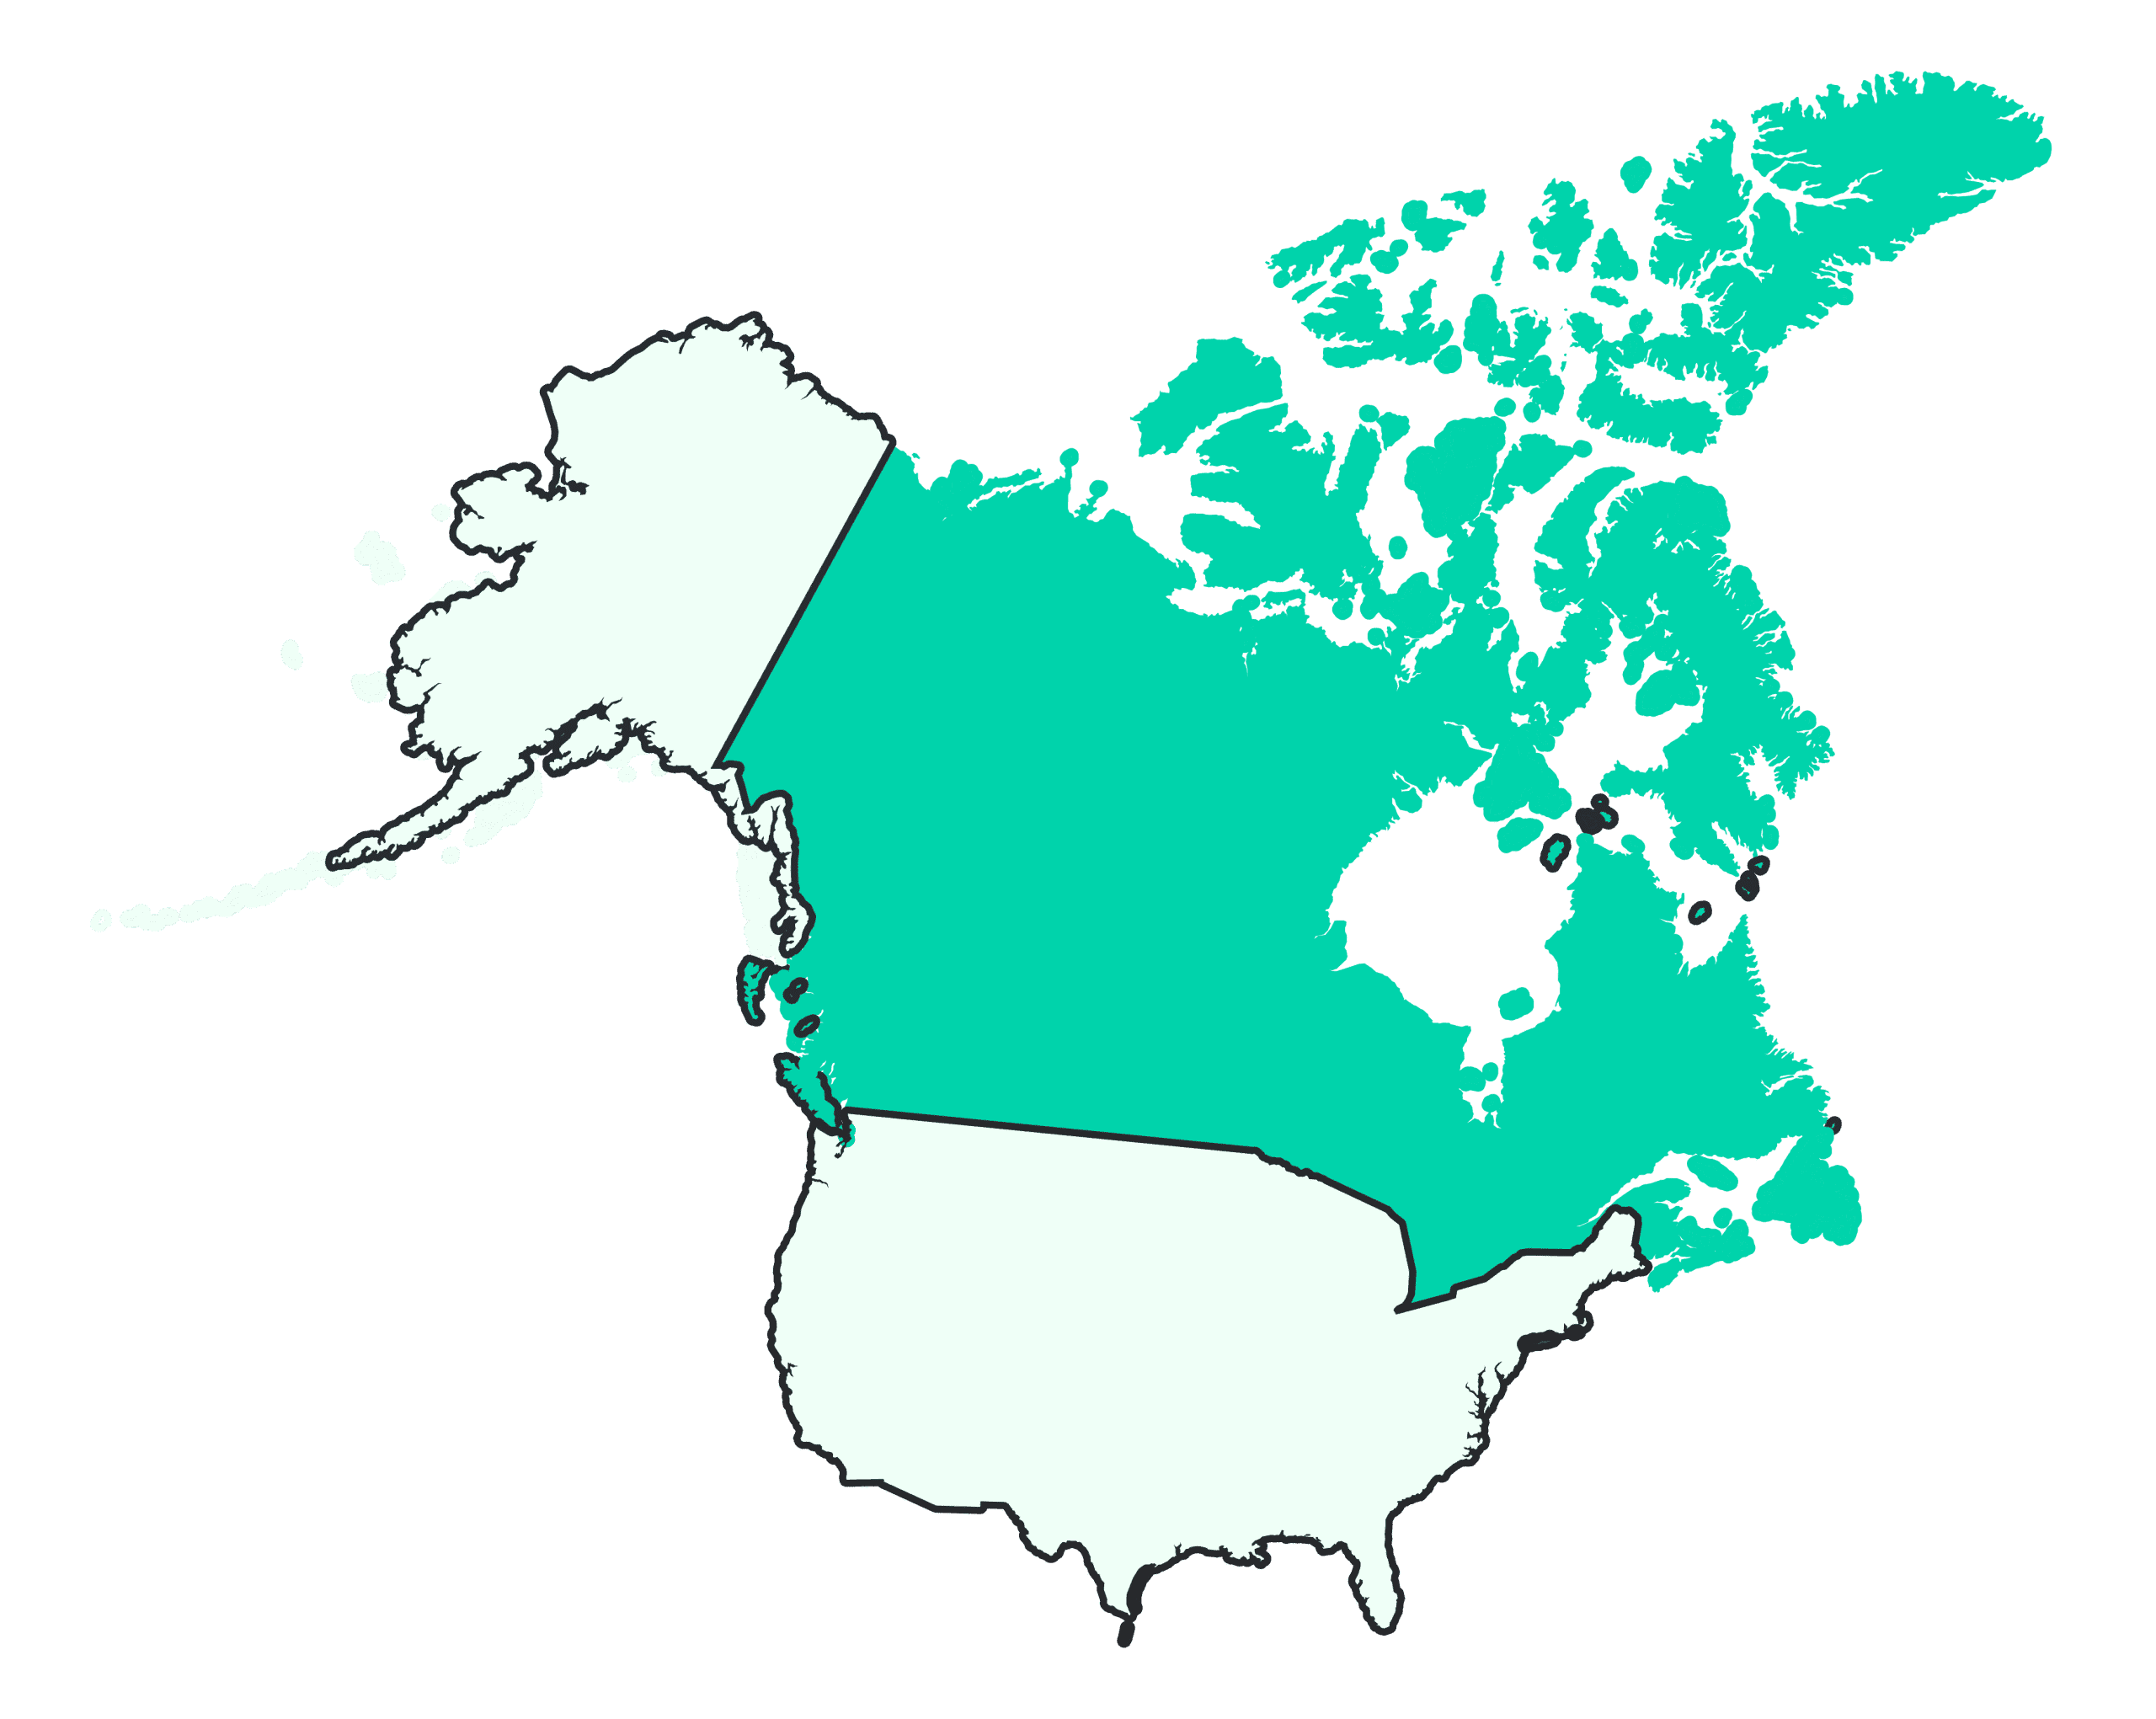 services in North America